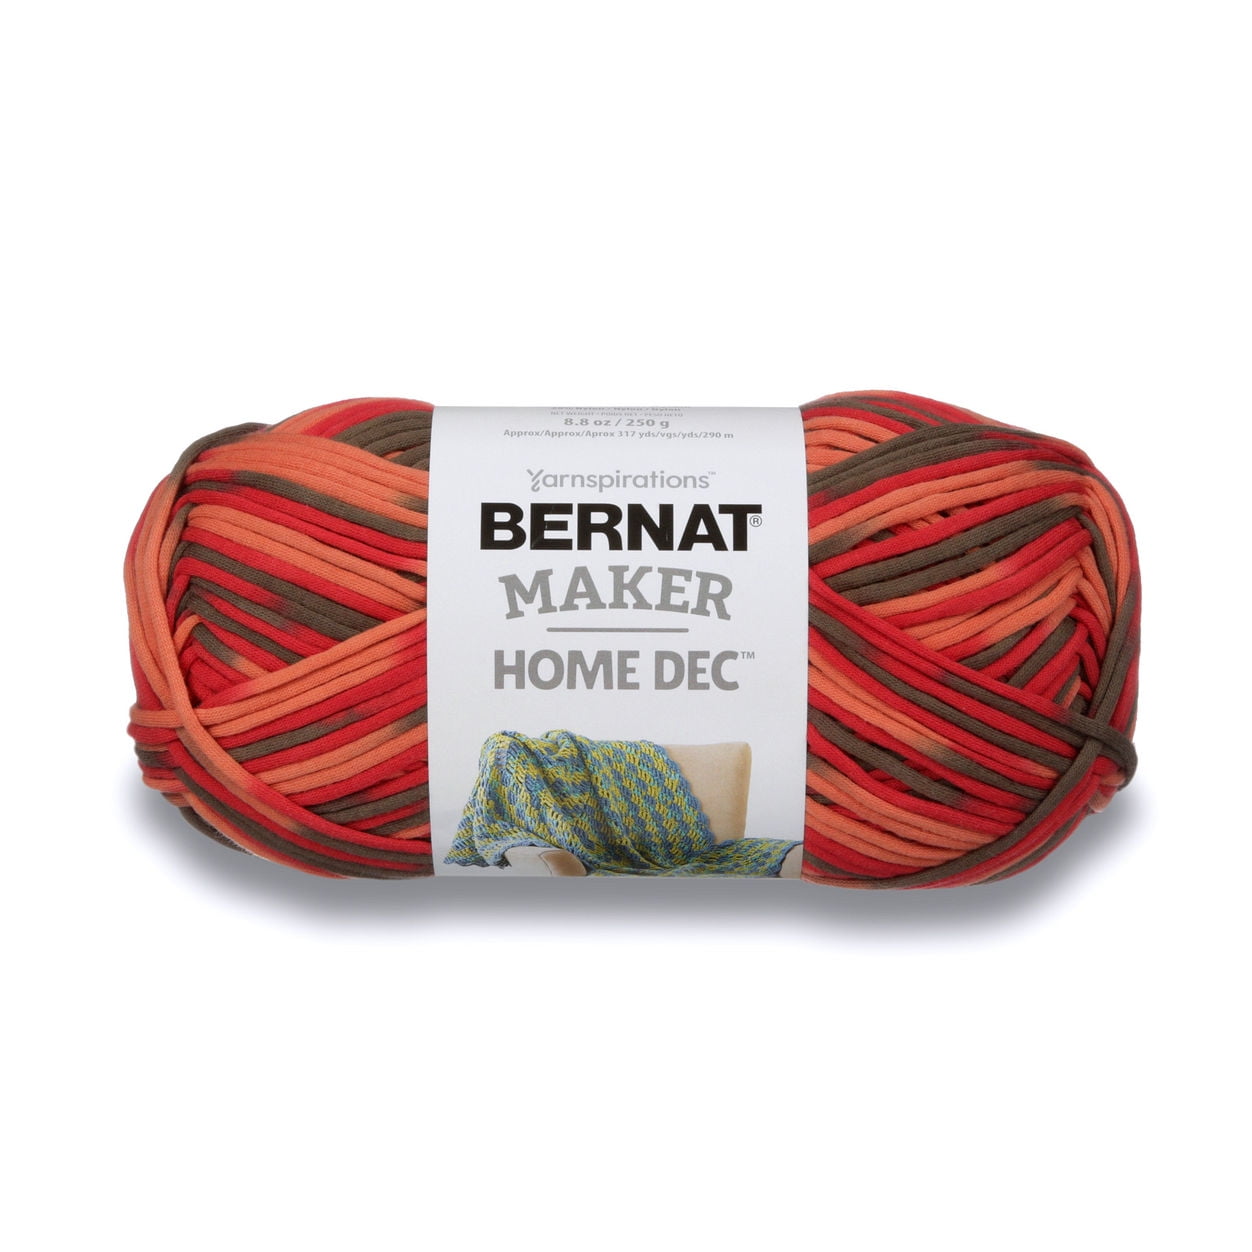 Bernat Maker Home Dec Yarn - Spice Variegate